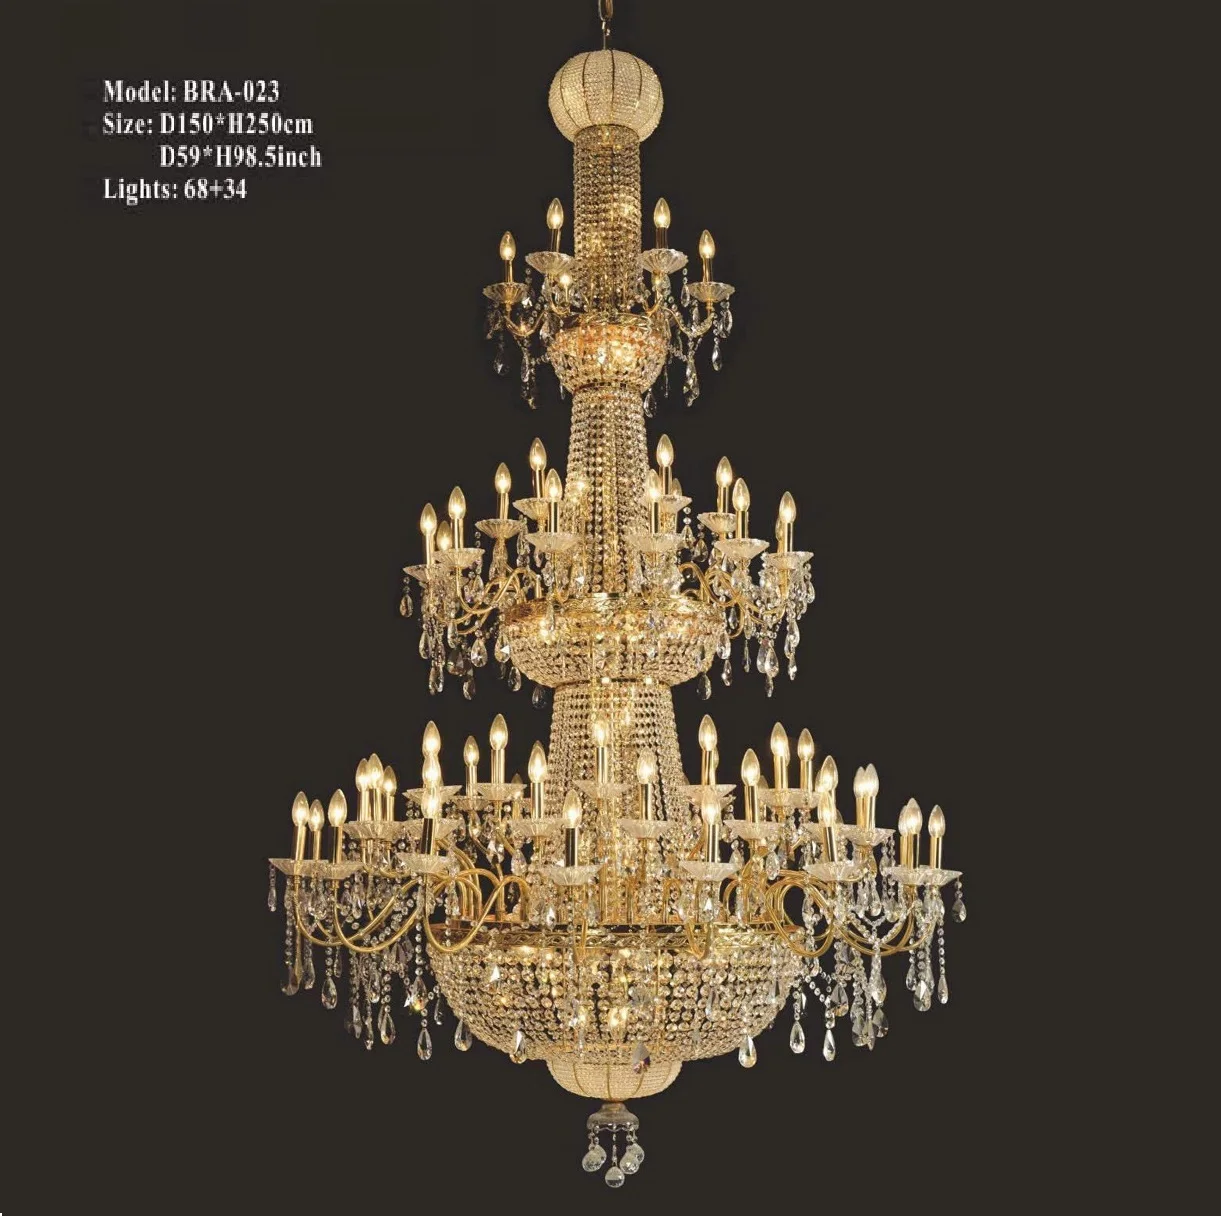 huge Luxury crystal chandeliers decoration modern lighting fixtures for big hall